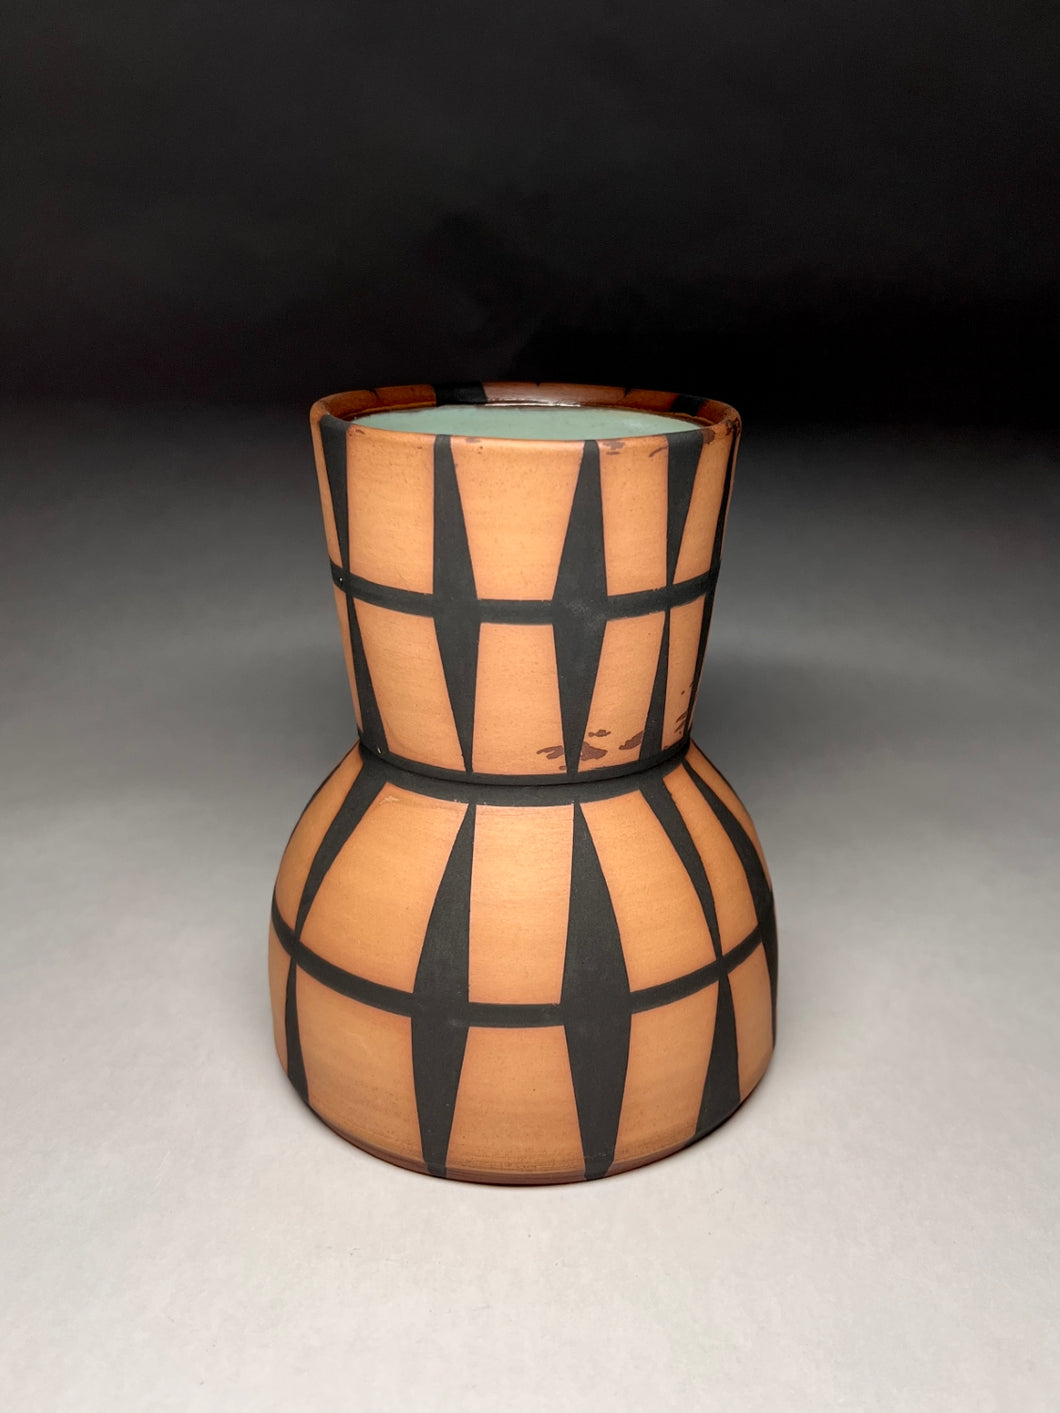 Patty Bilbro, “Diamond Pattern Vase”, #2